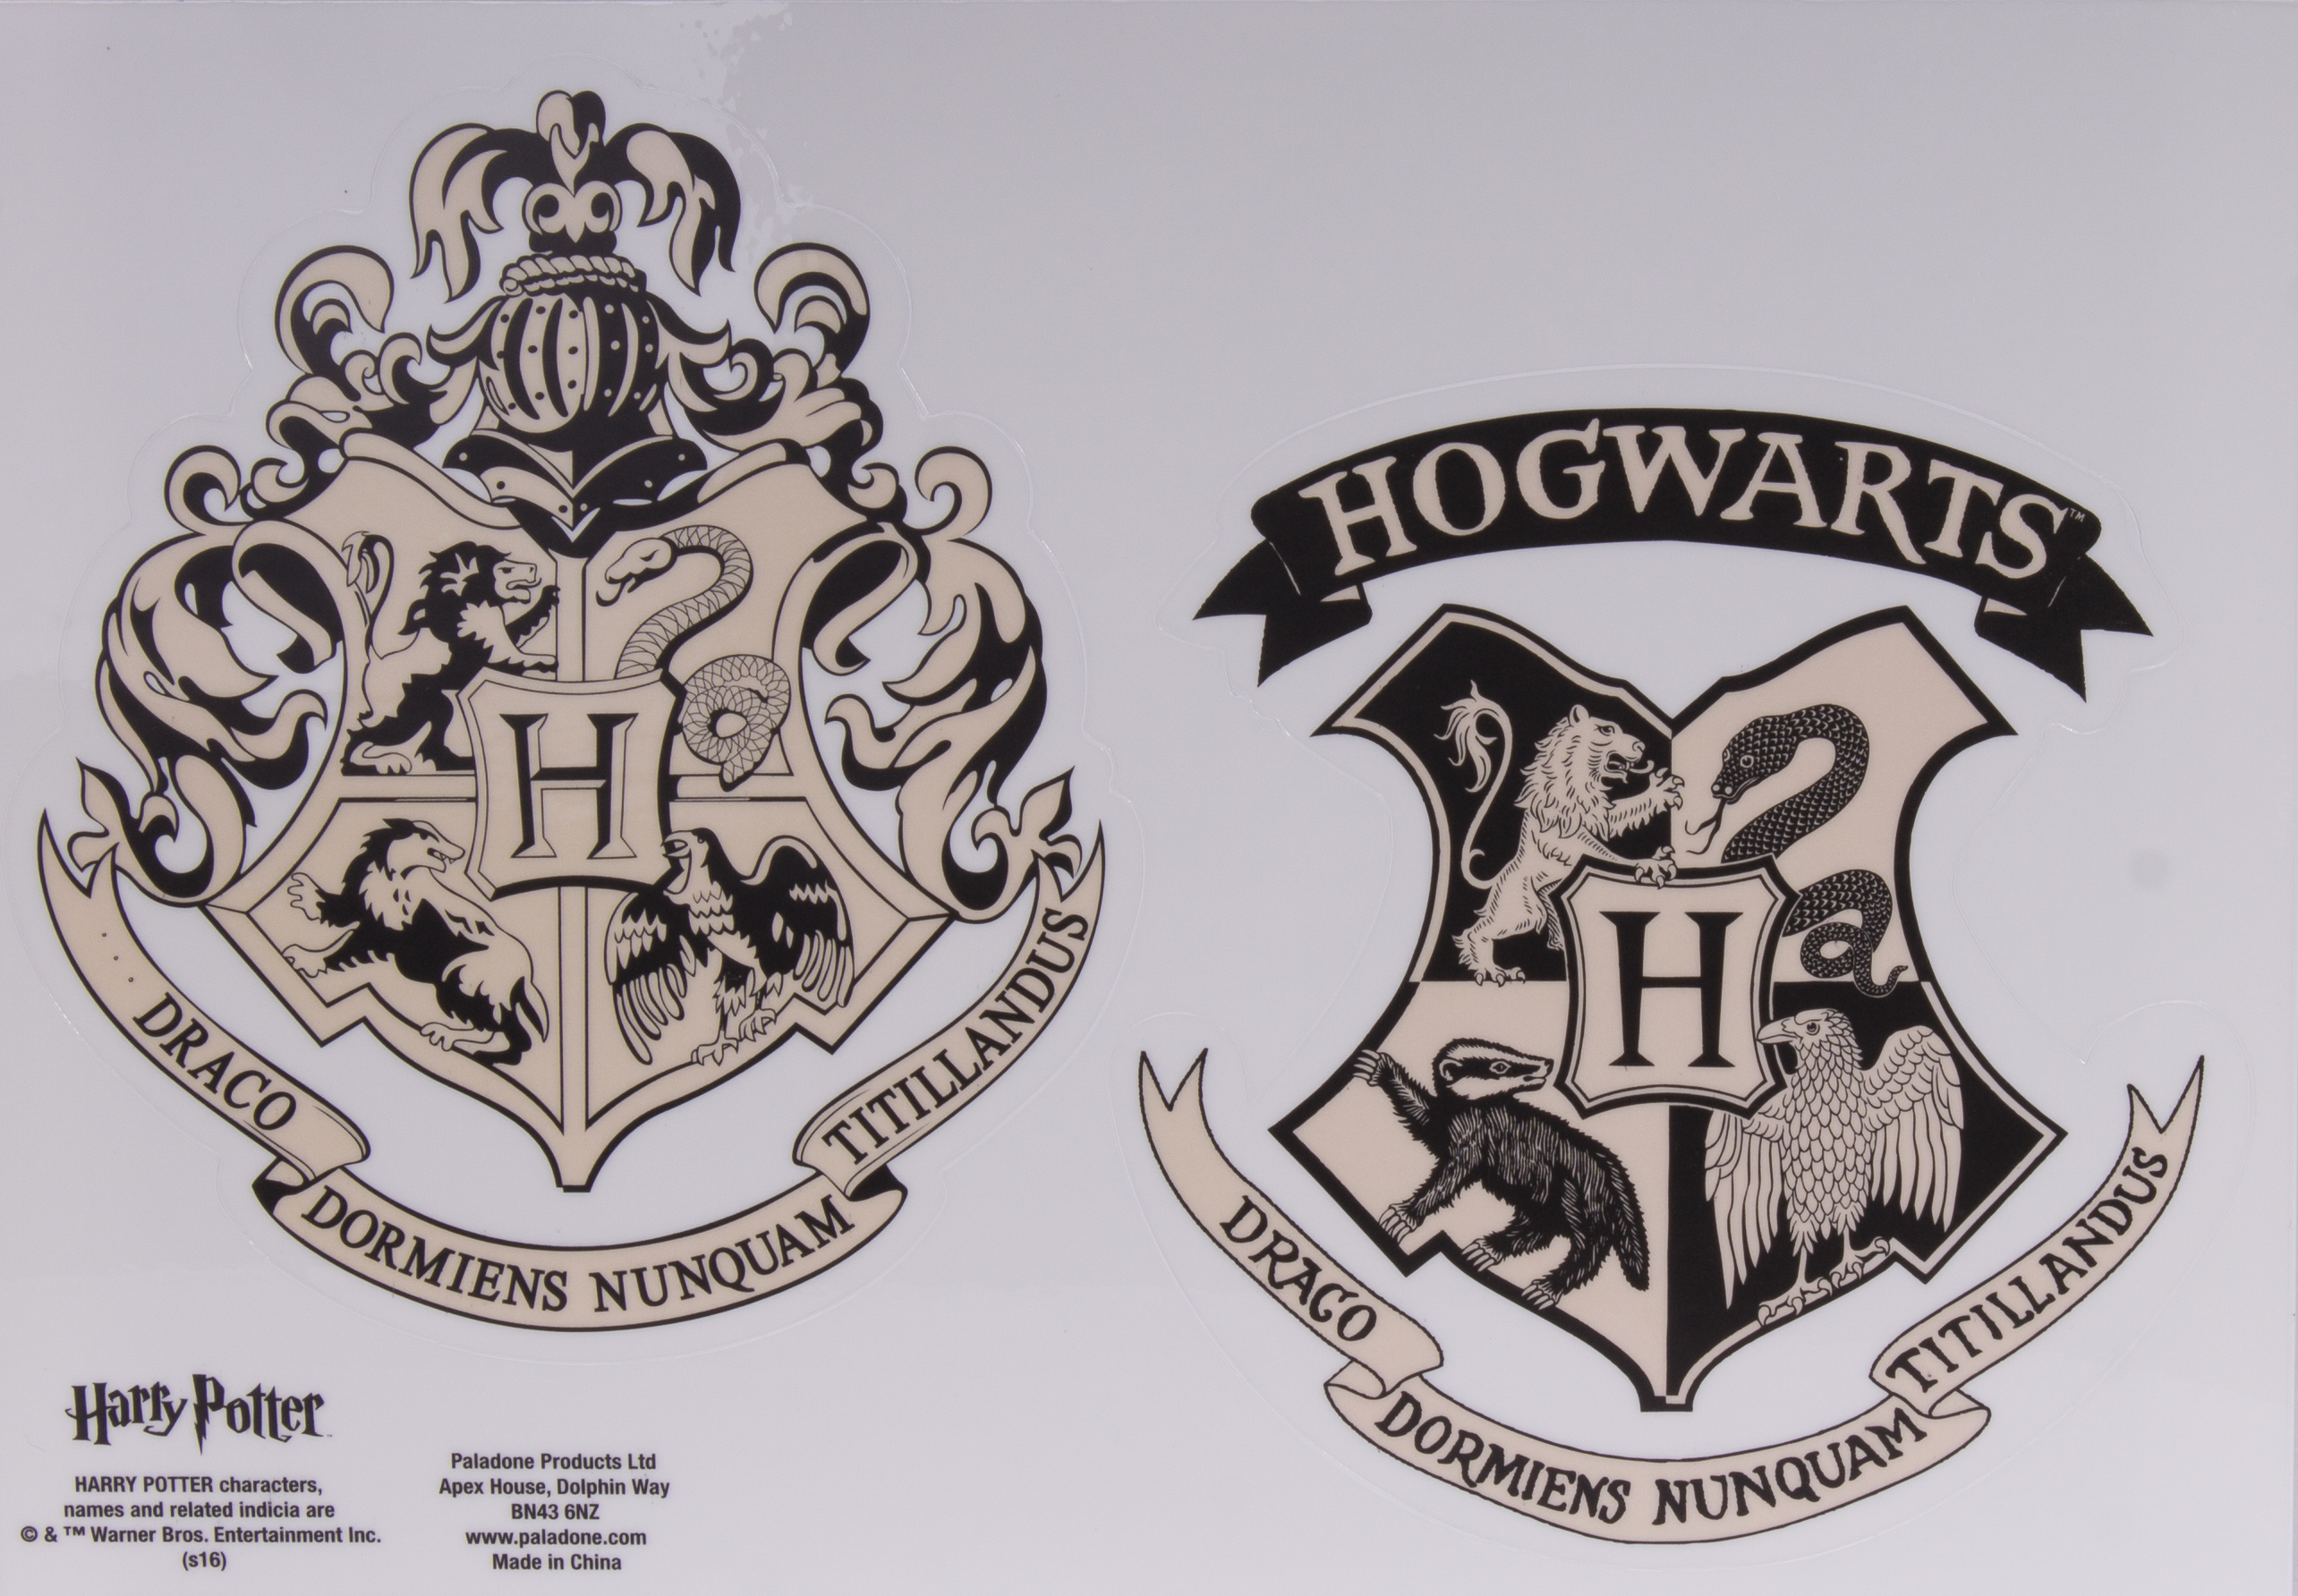 Harry Potter Gadget Decals - Reusable Vinyl Sticker Clings - 27 Stickers